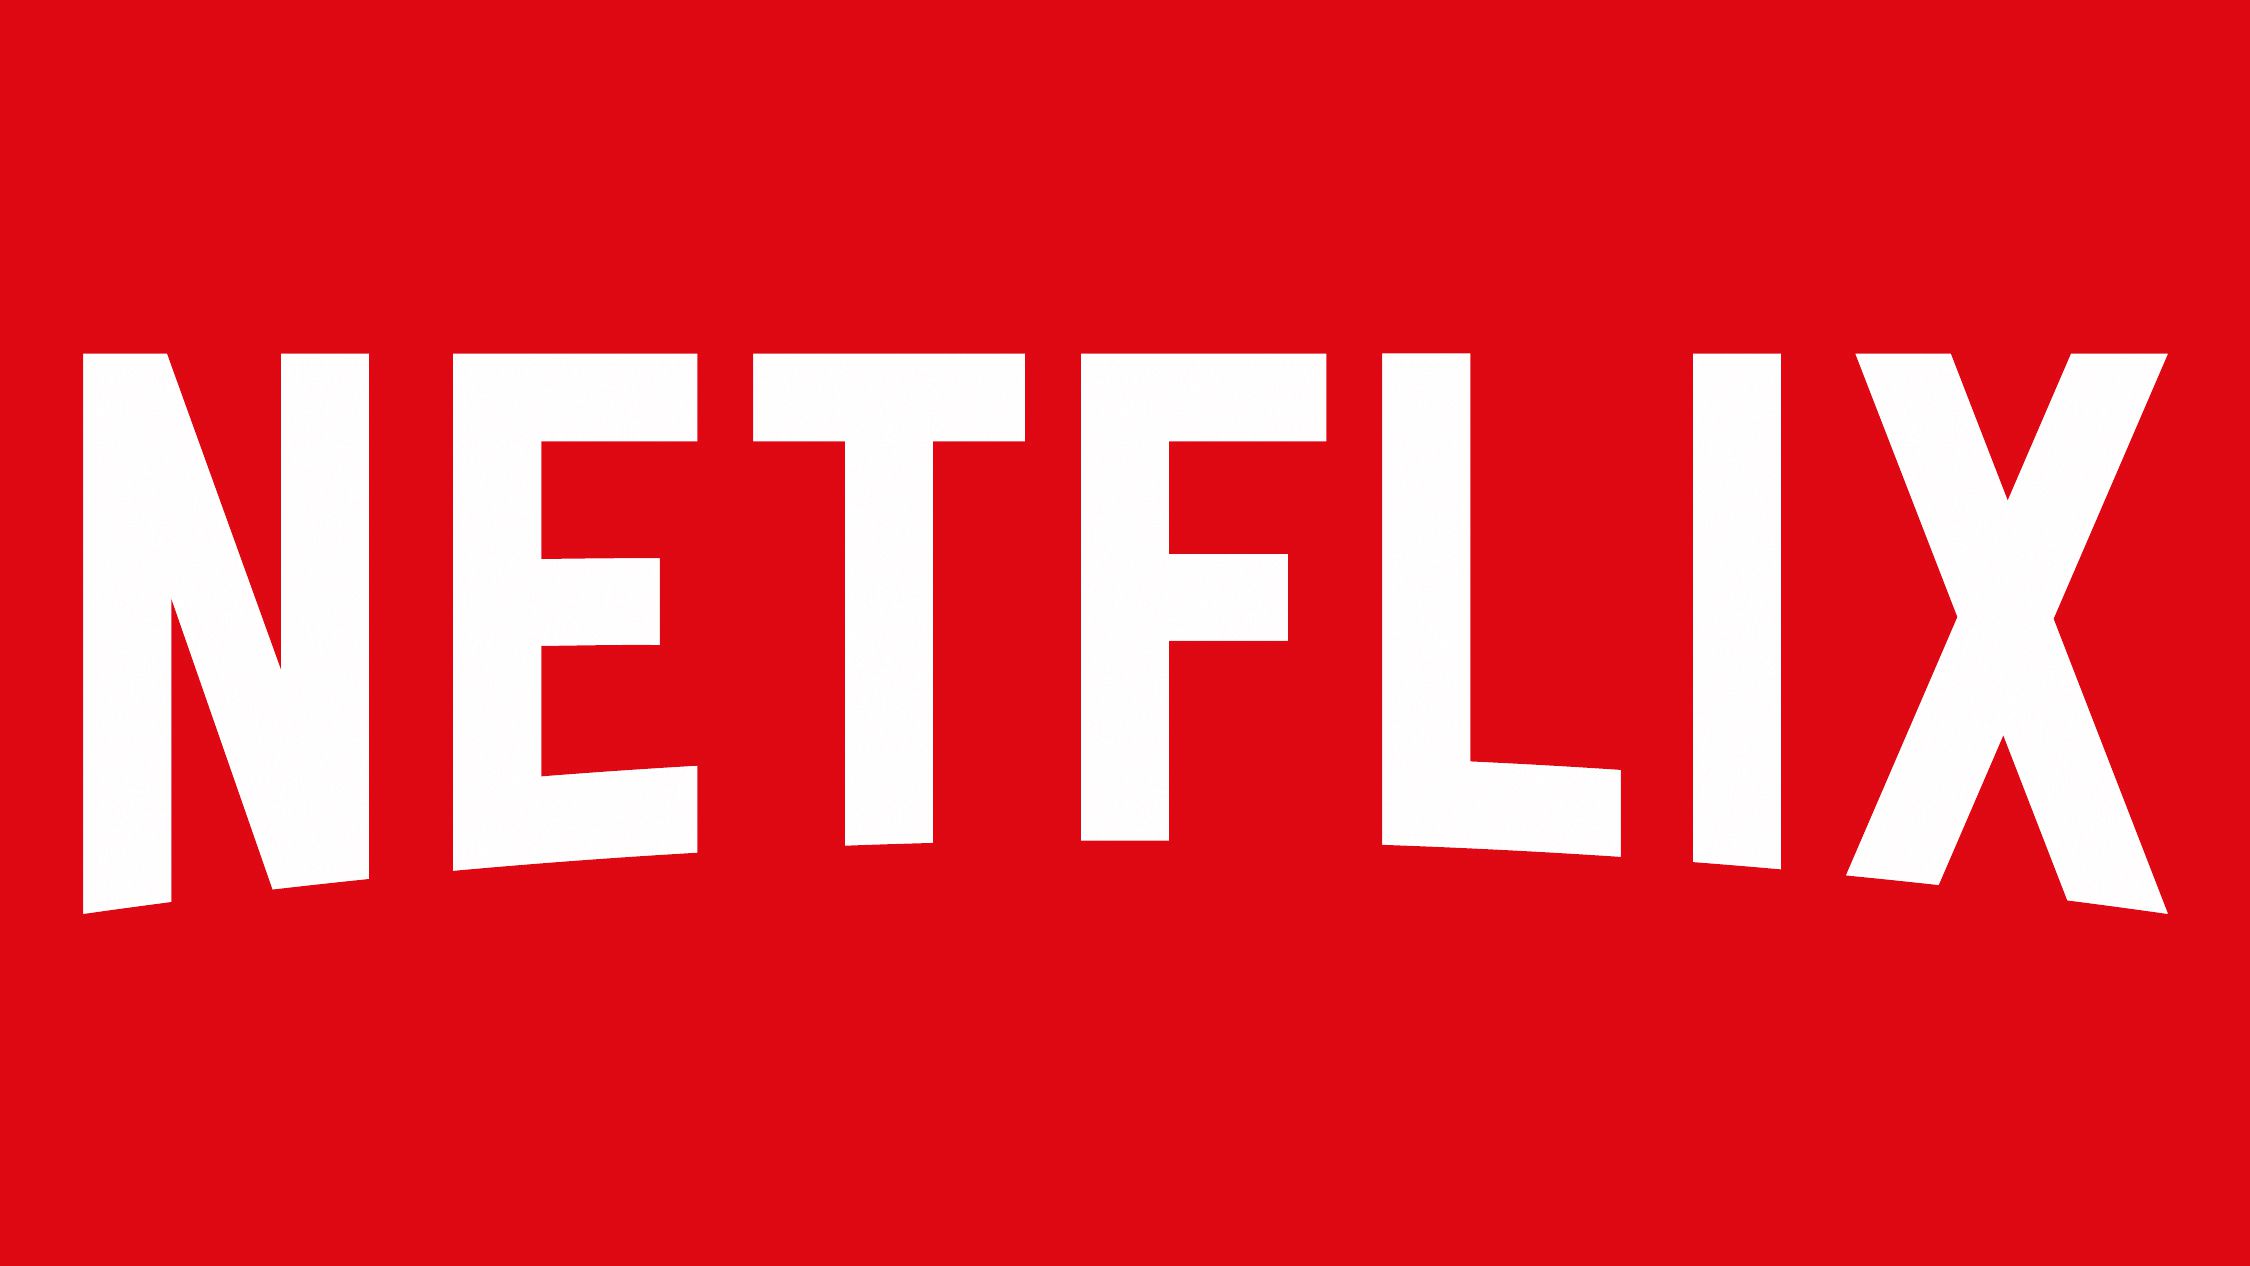 Install Netflix without paying